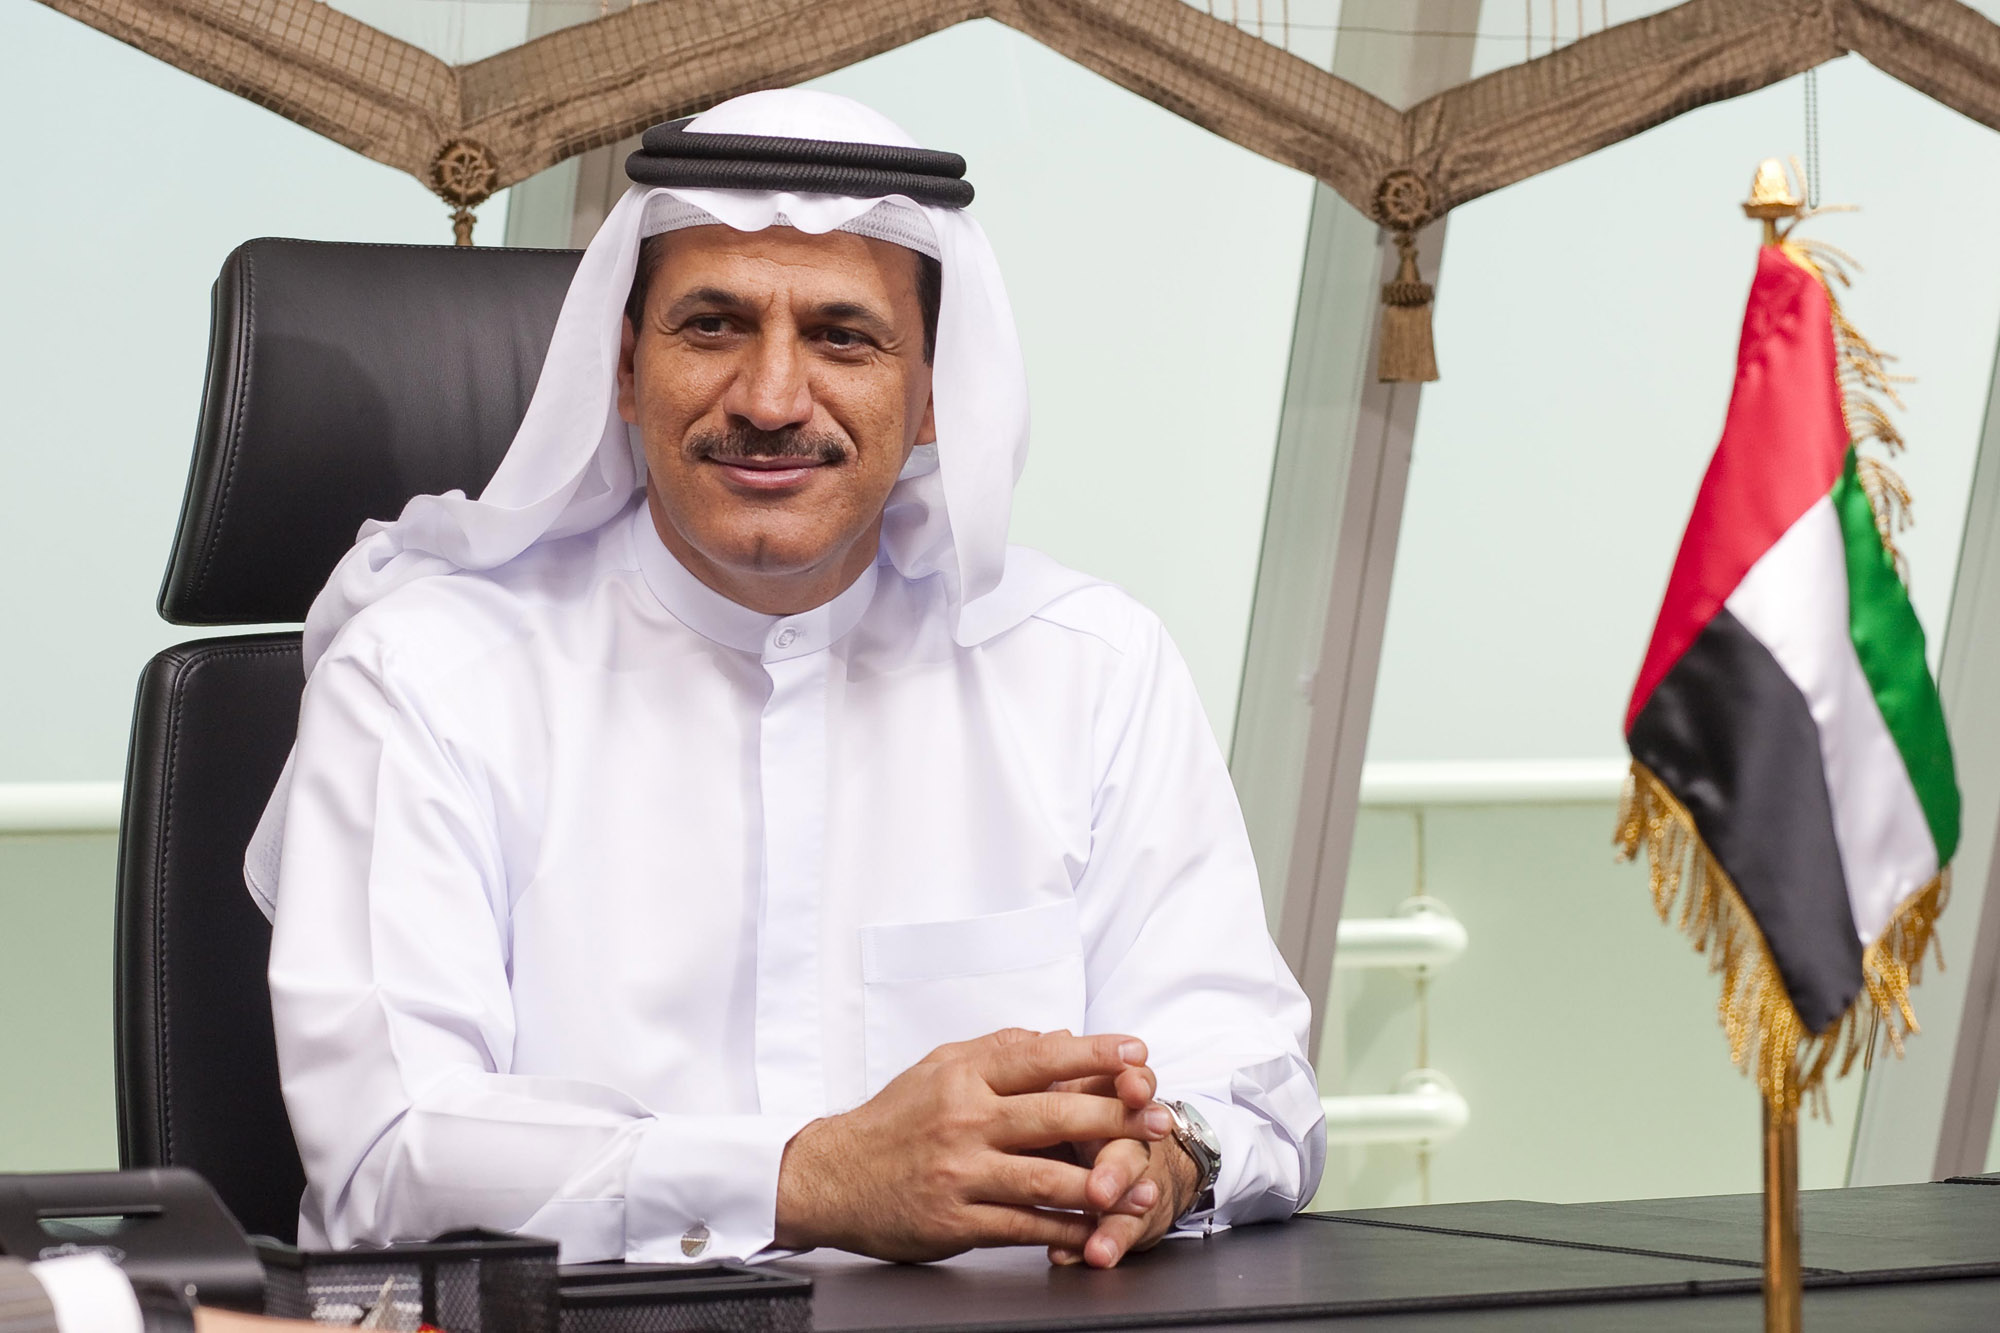 UAE Minister of Economy Sultan bin Saeed Al Mansouri